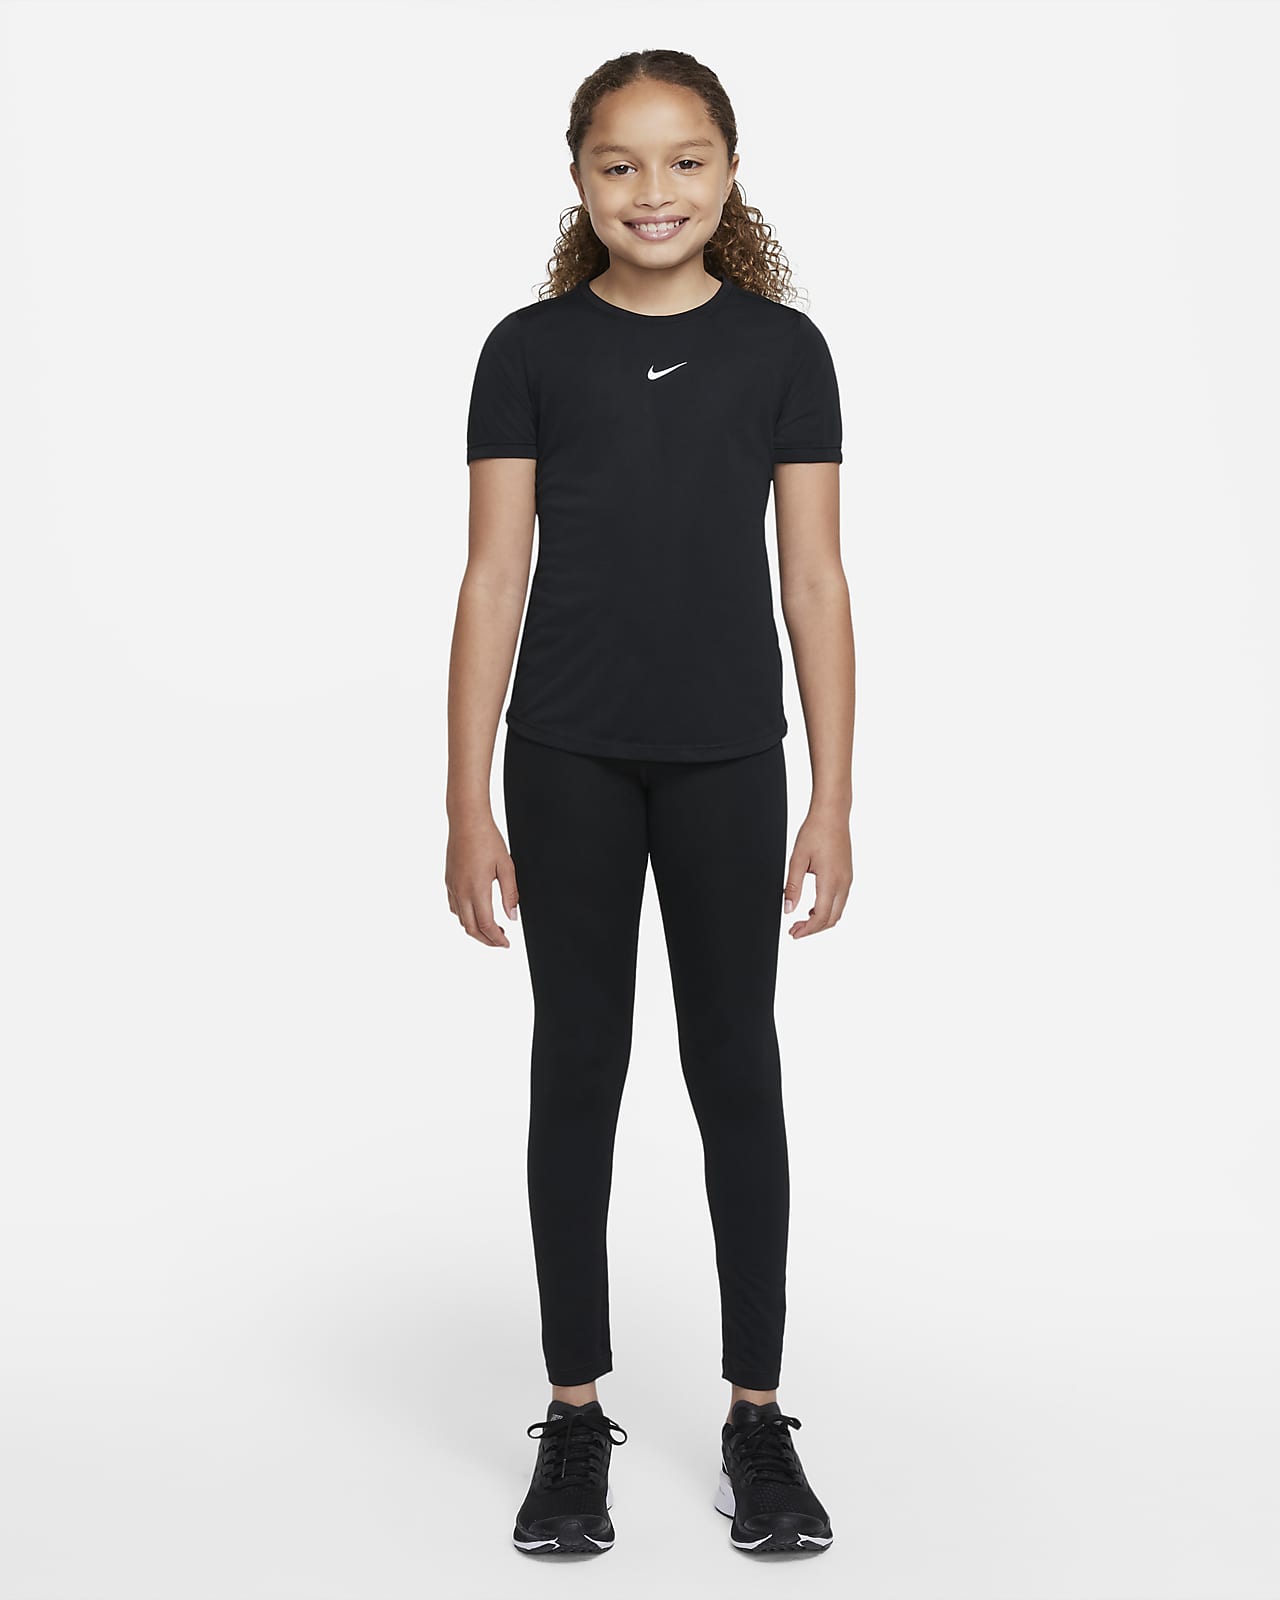 (Girls\') Nike Kids\' Short-Sleeve Big Top. One